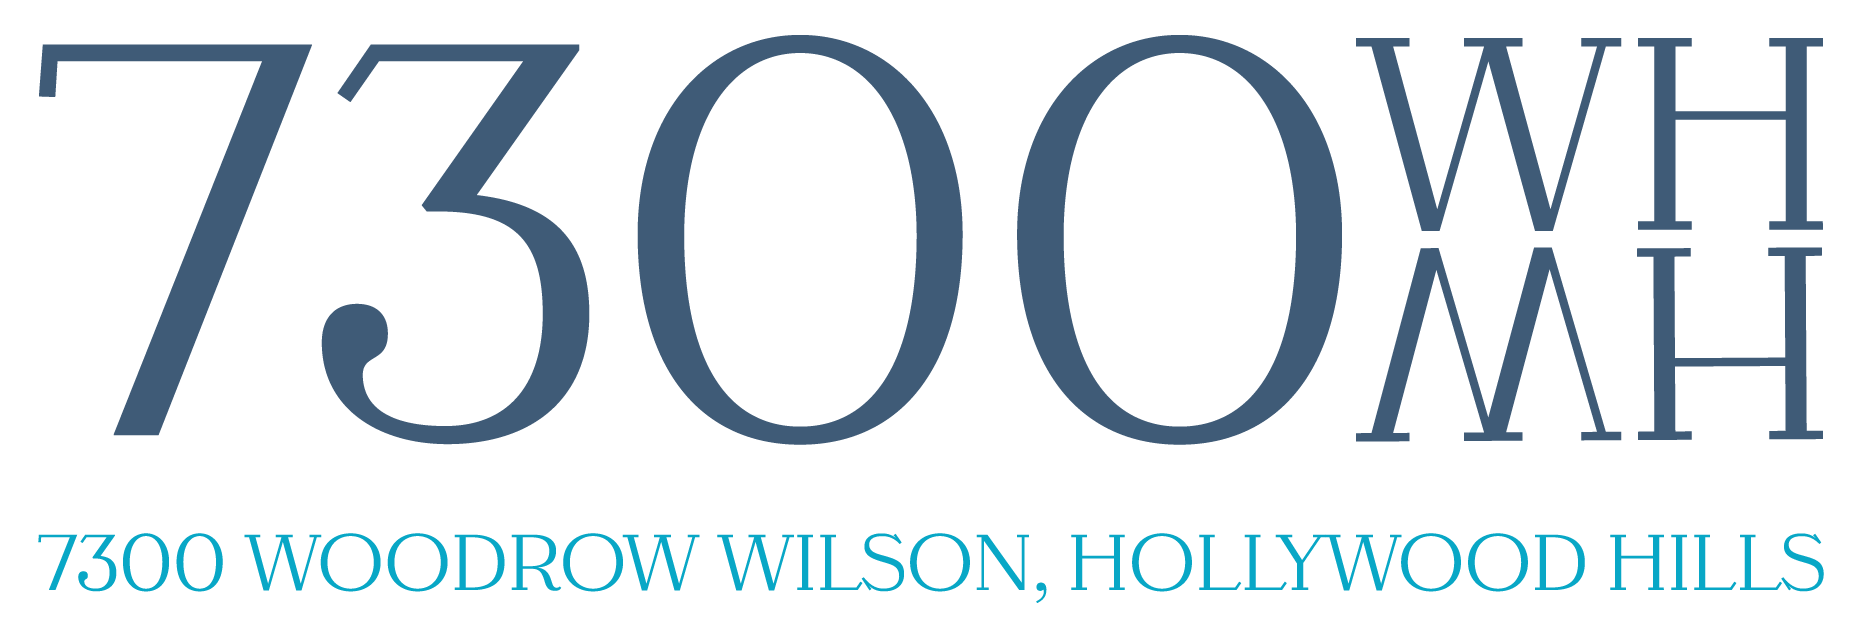 7300 Woodrow Wilson Logo.png